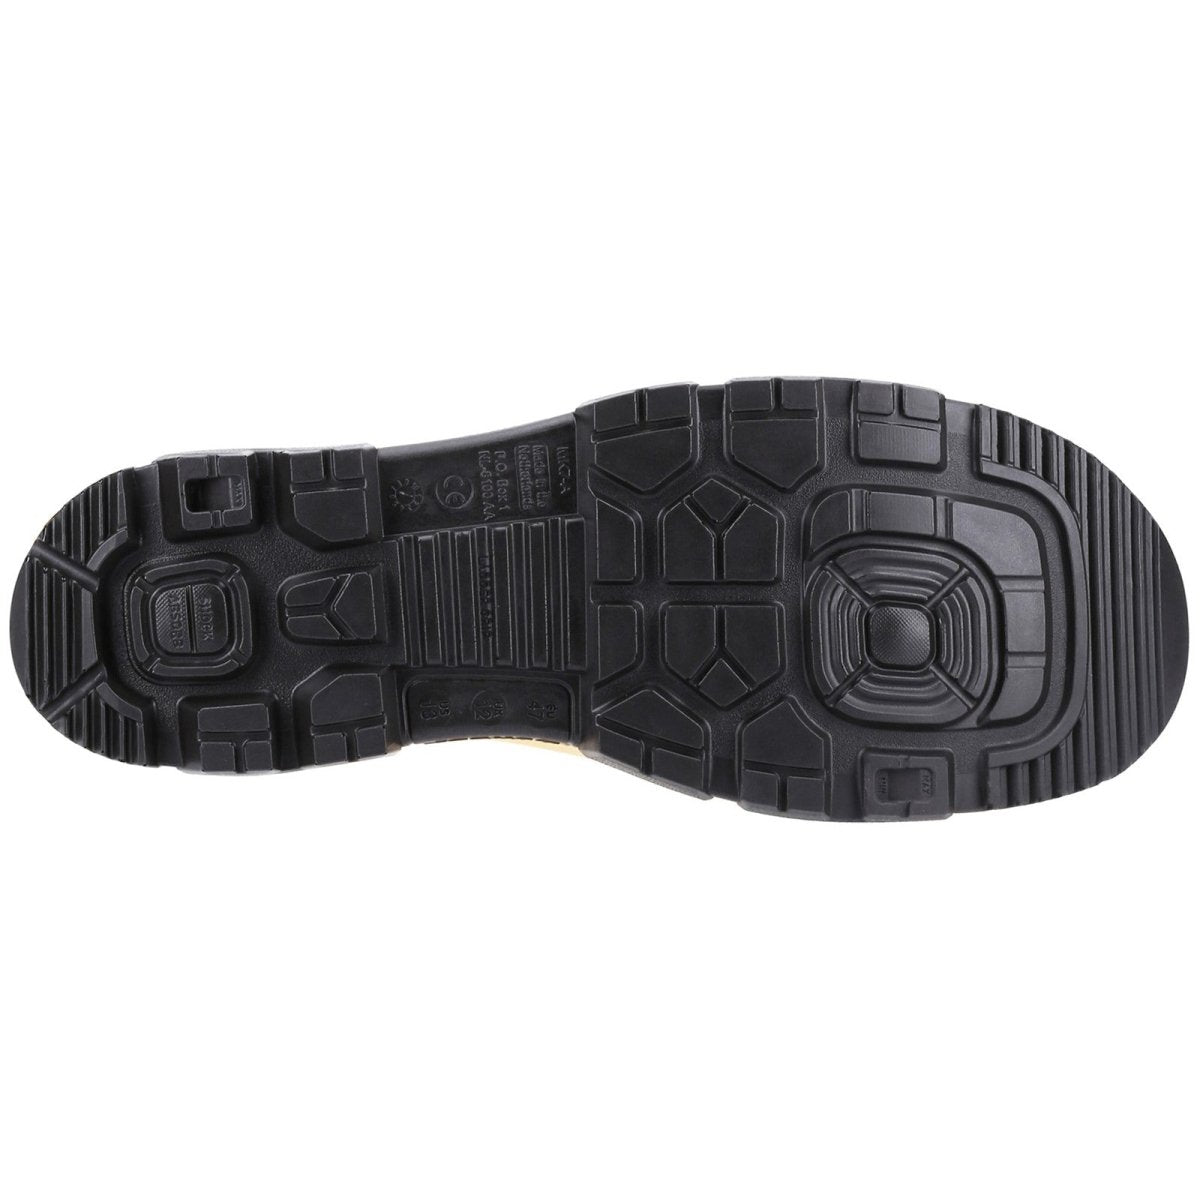 Dunlop Purofort FieldPRO Full Safety Wellington - Shoe Store Direct